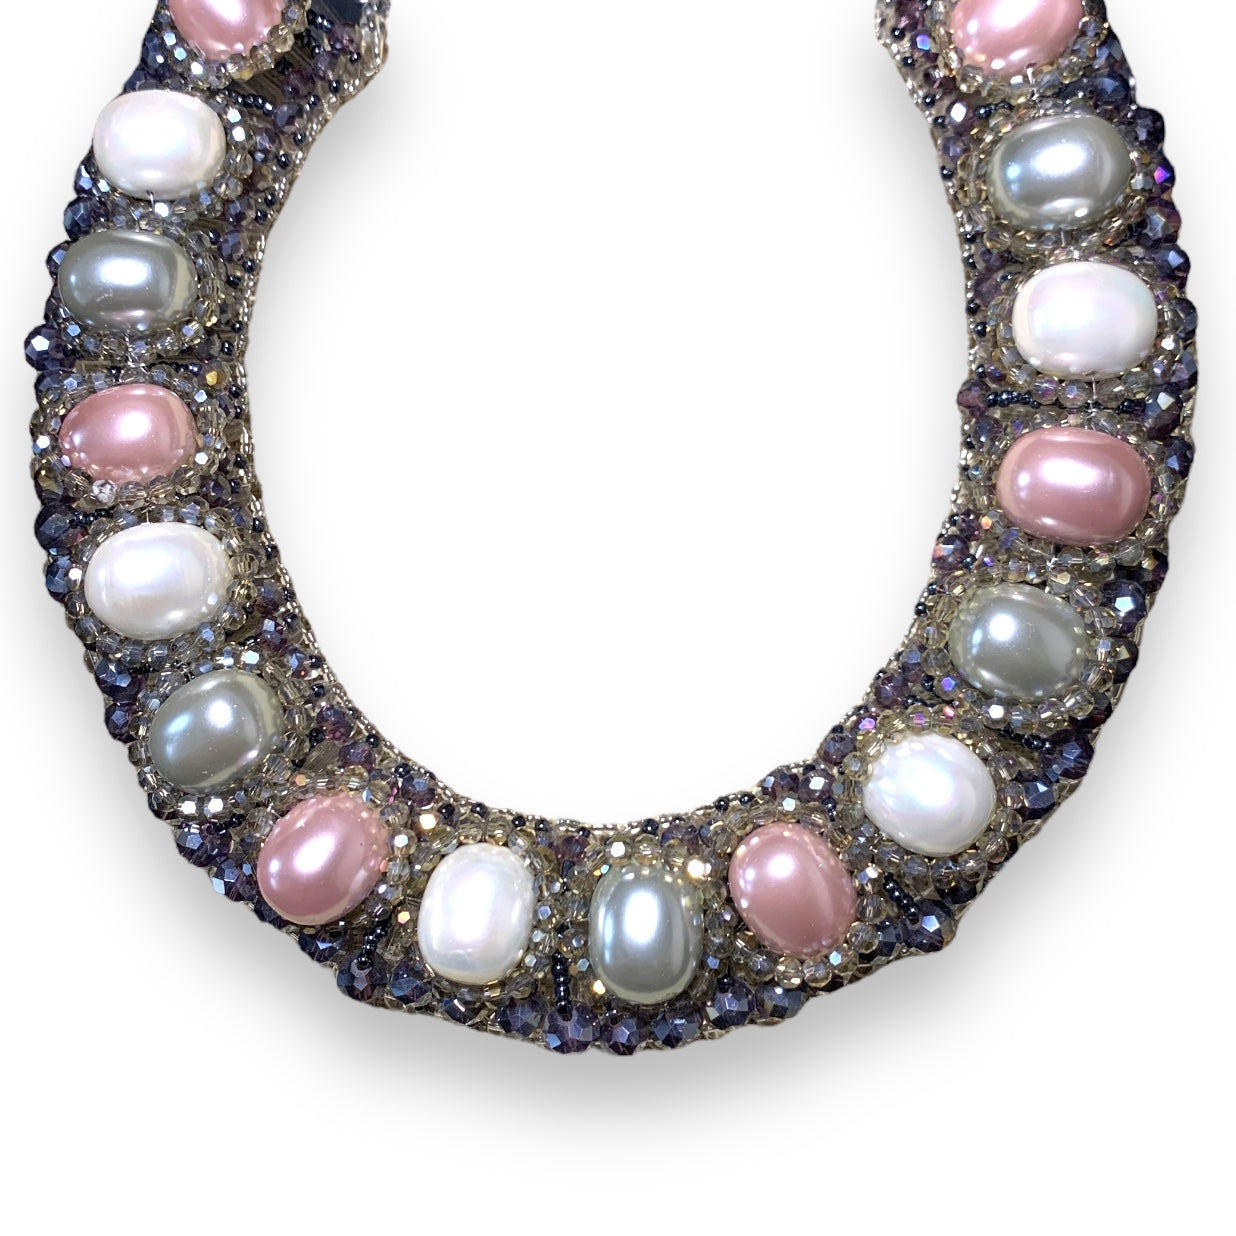 Handmade Choker 18" Pink & White Freshwater Pearls Statement Necklace